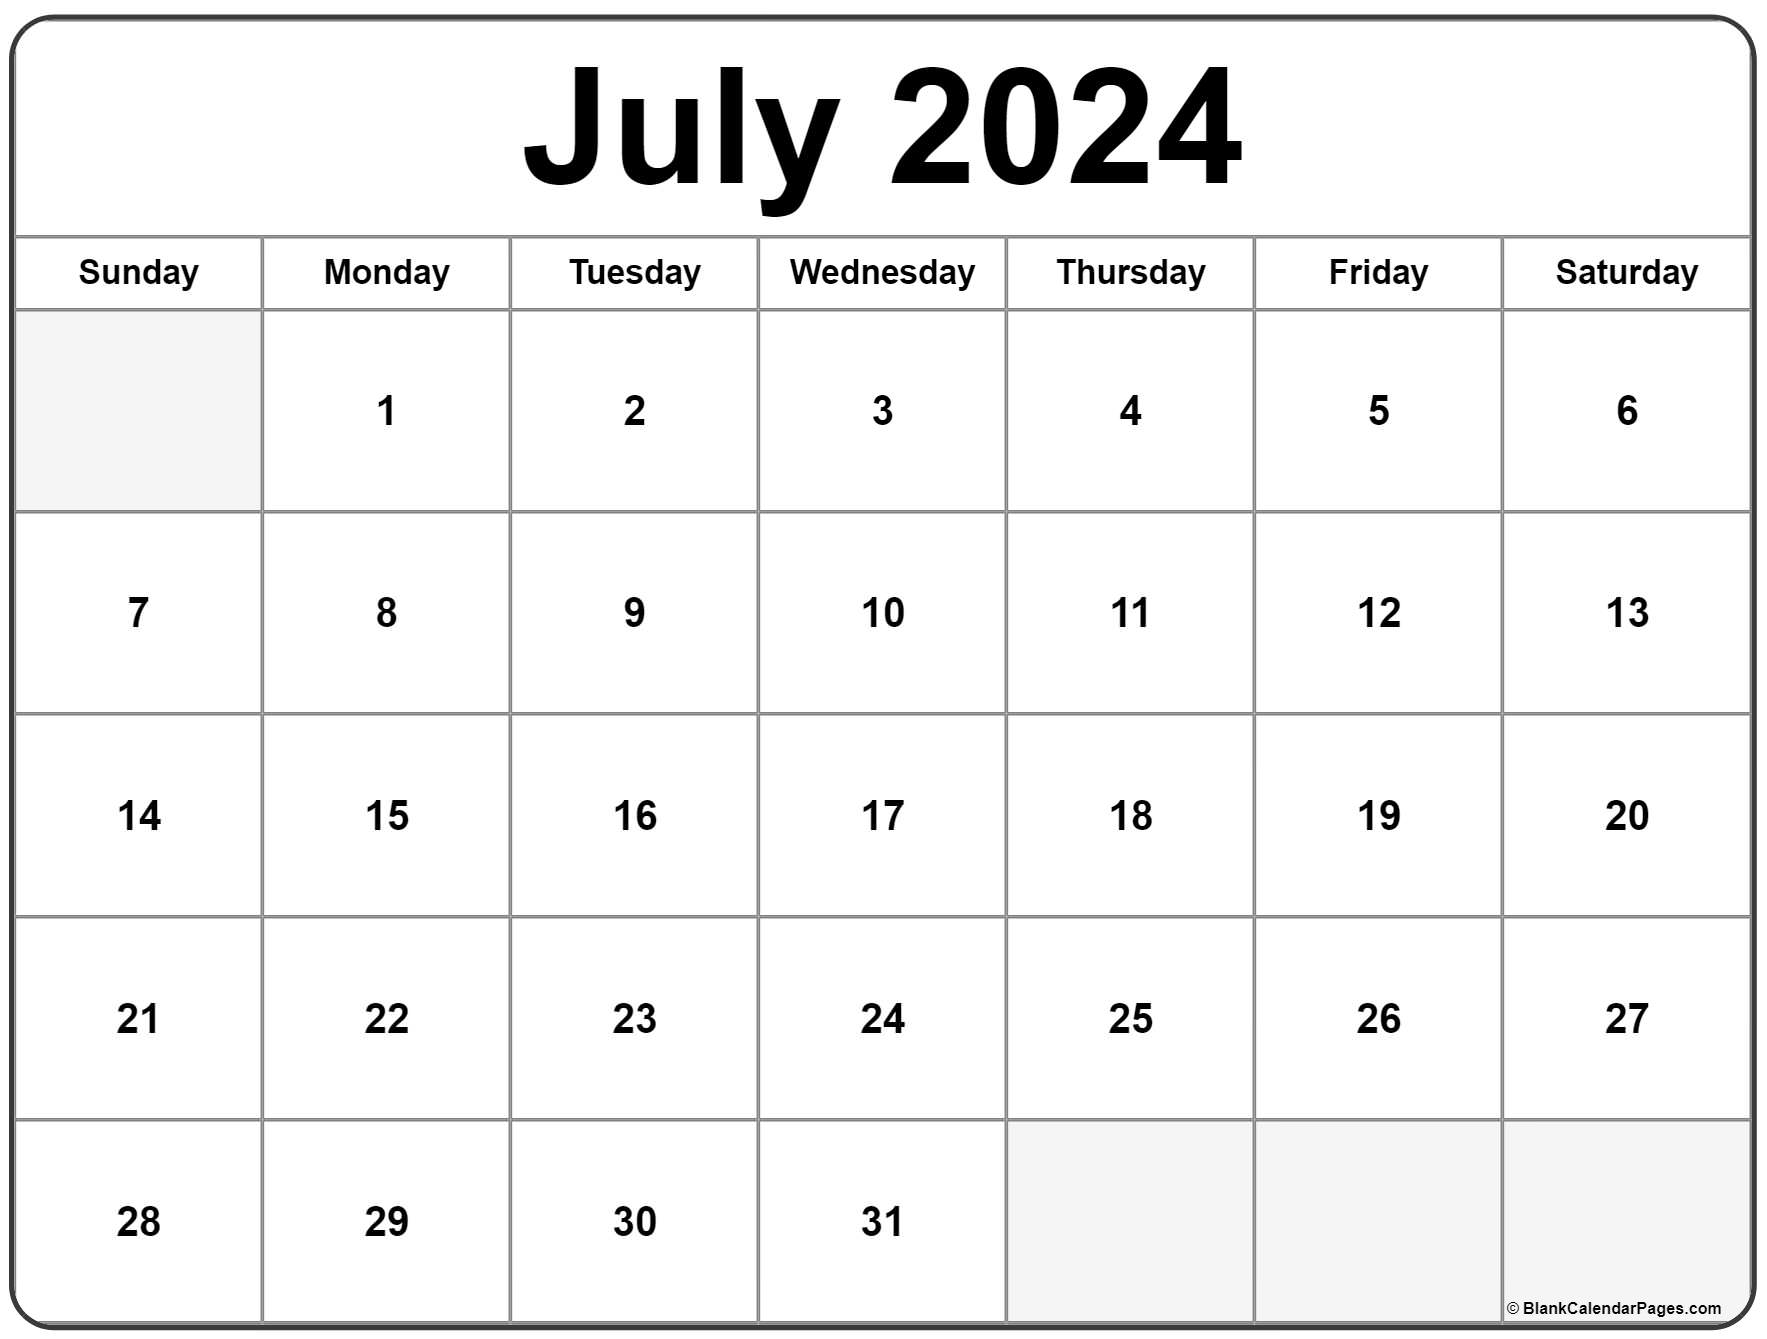 calendar-july-2024-fillable-calendar-2024-all-holidays